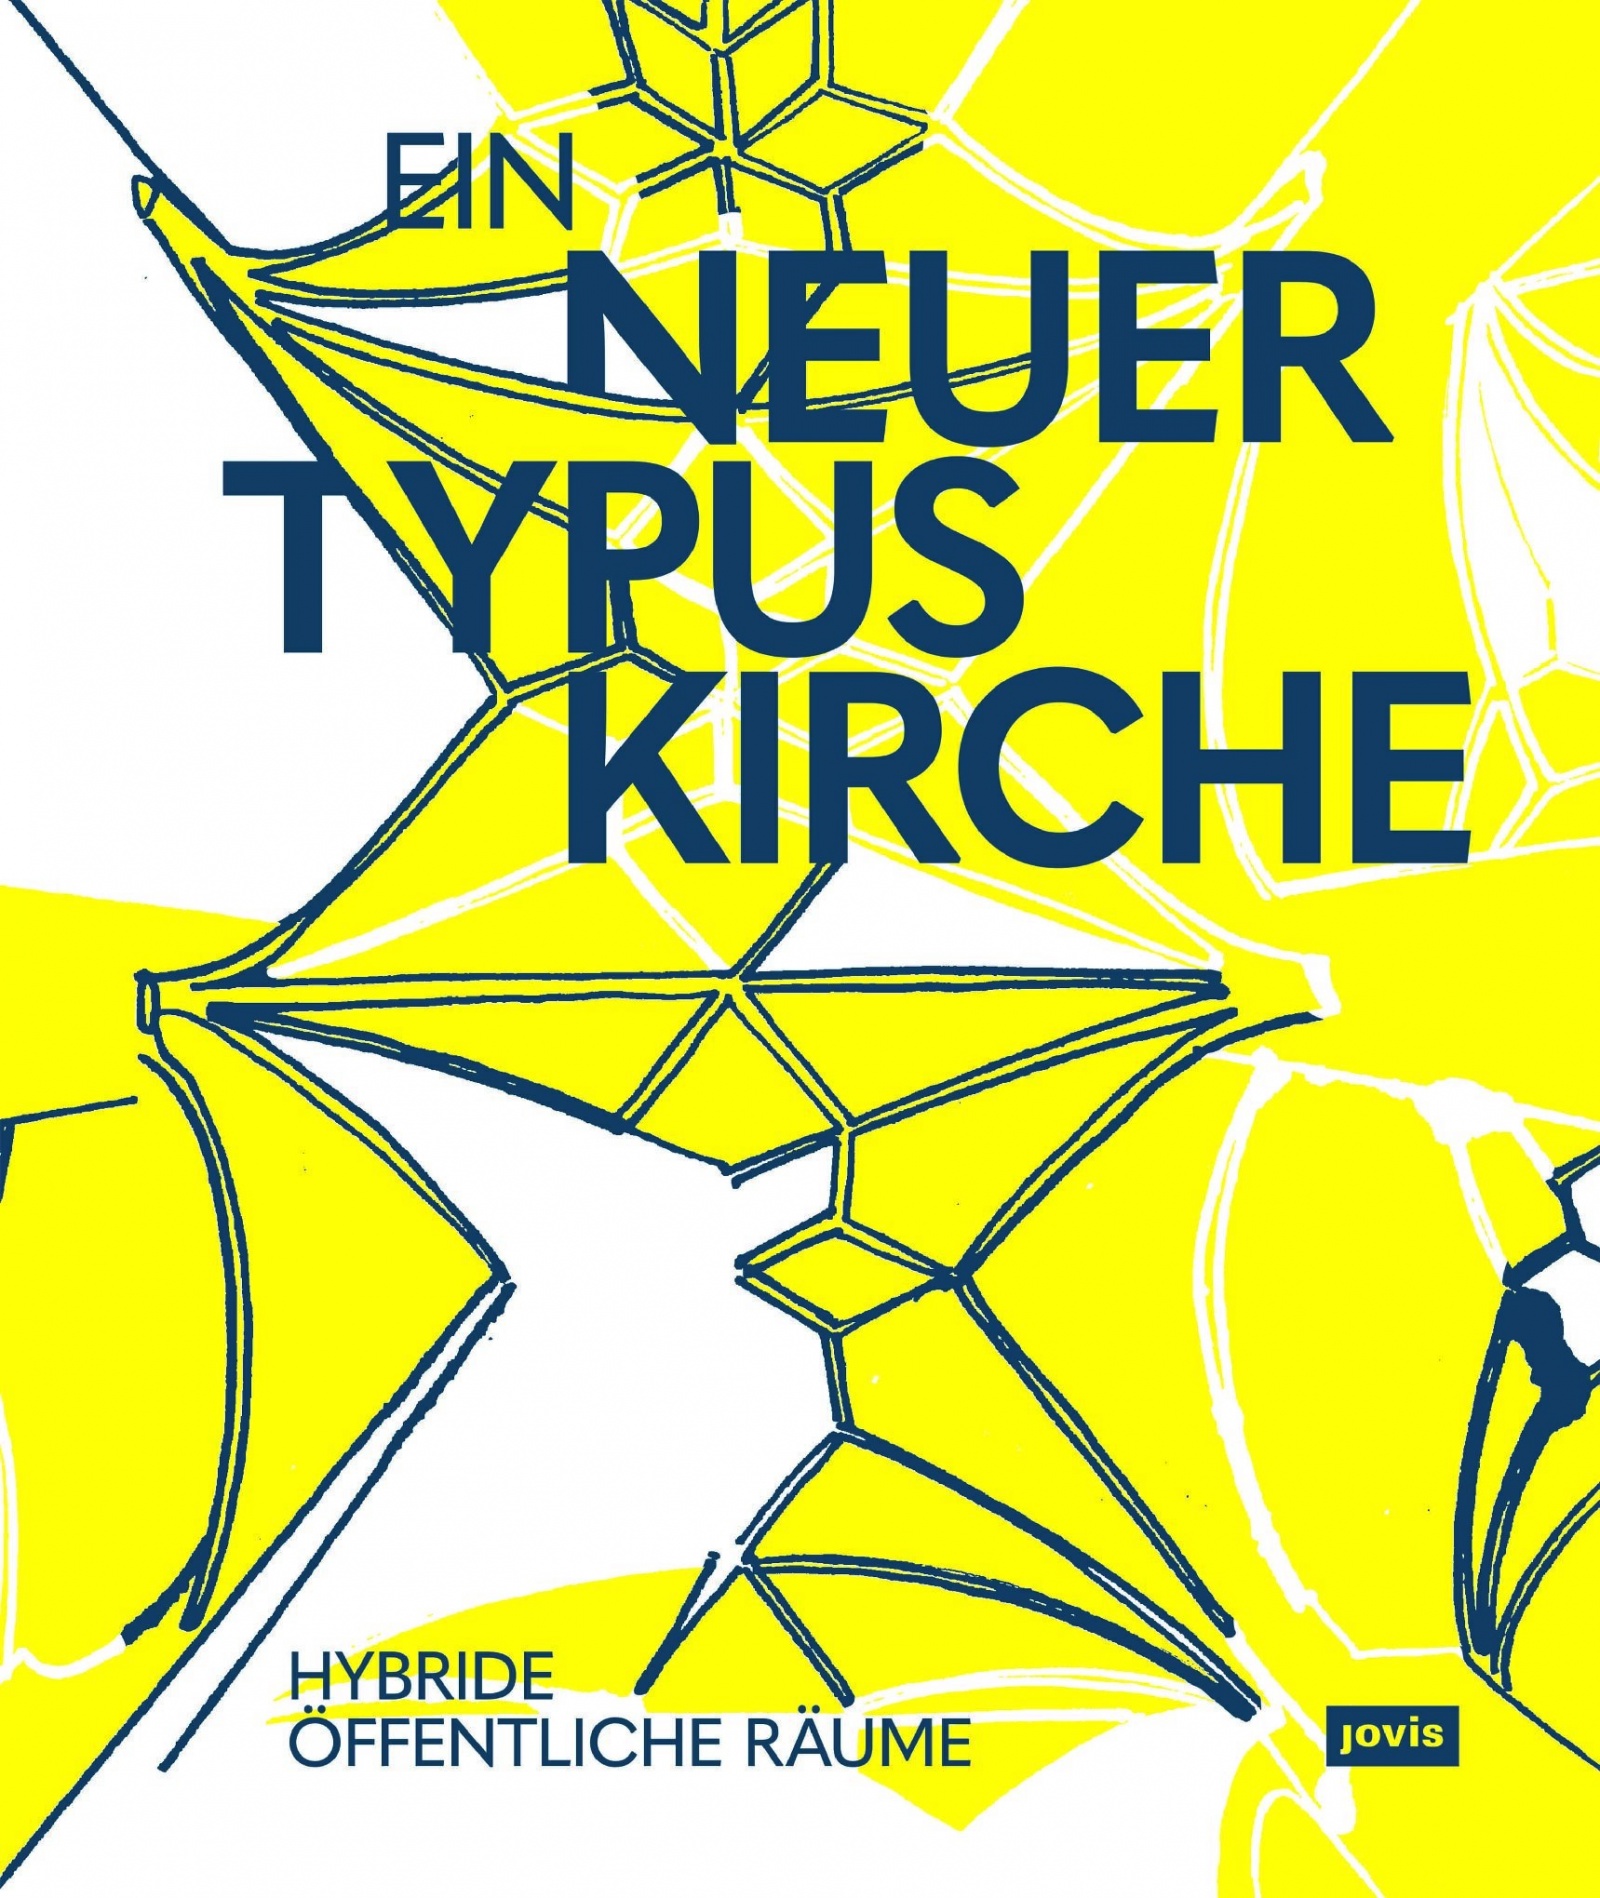 500 Kirchen - 500 Ideen, Cover (front) Publikation "Ein neuer Typus Kirche", Bild: Elke Bergt, Erfurt